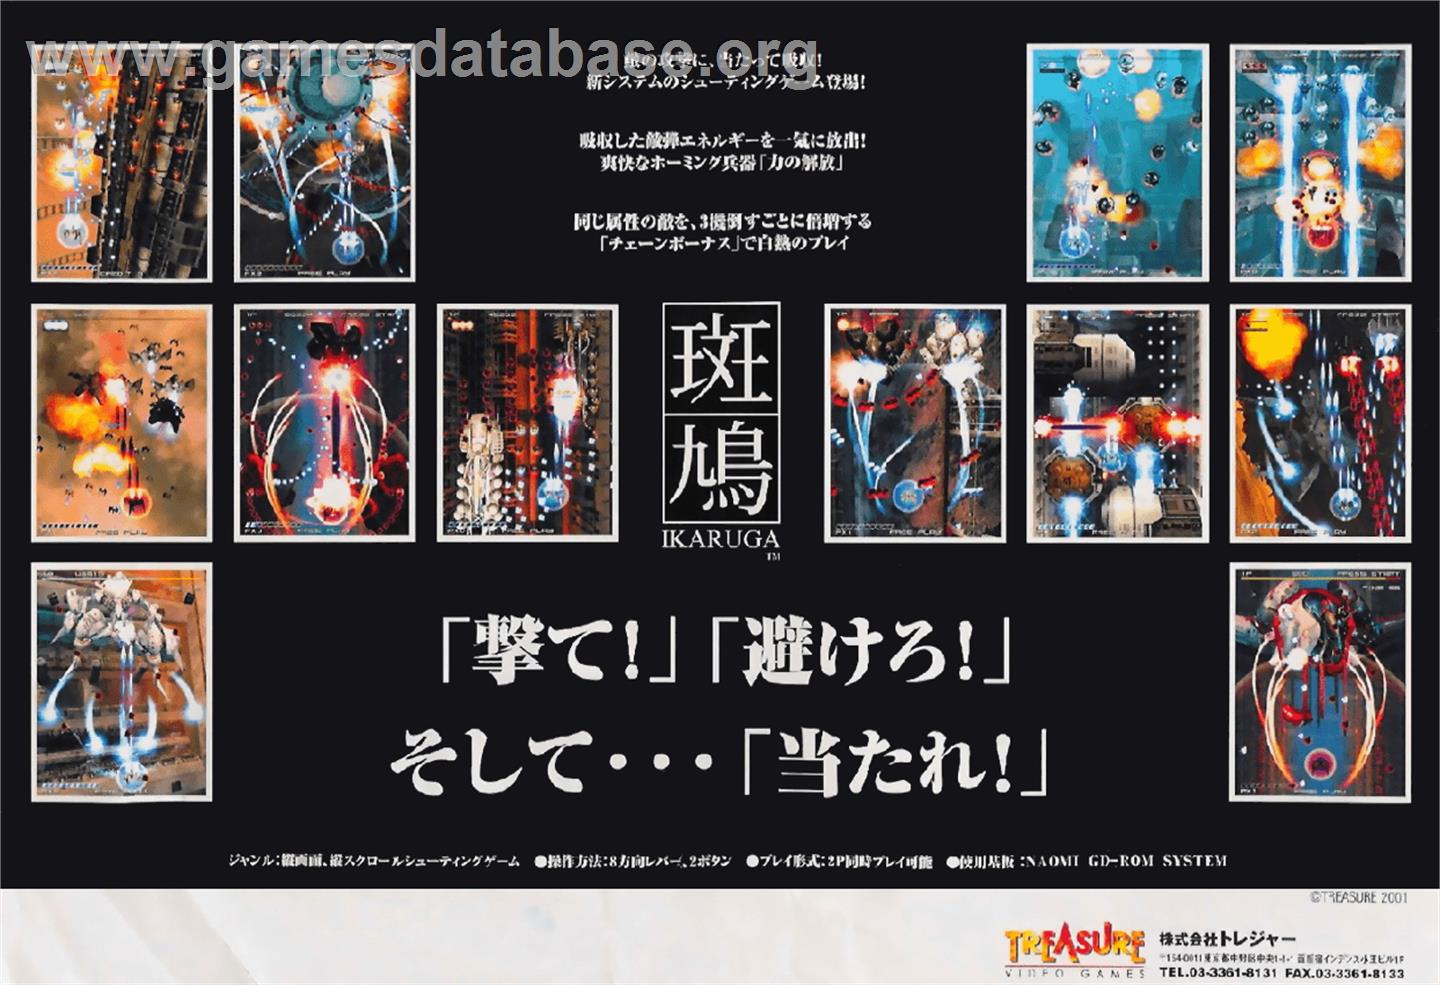 Ikaruga - Nintendo GameCube - Artwork - Advert